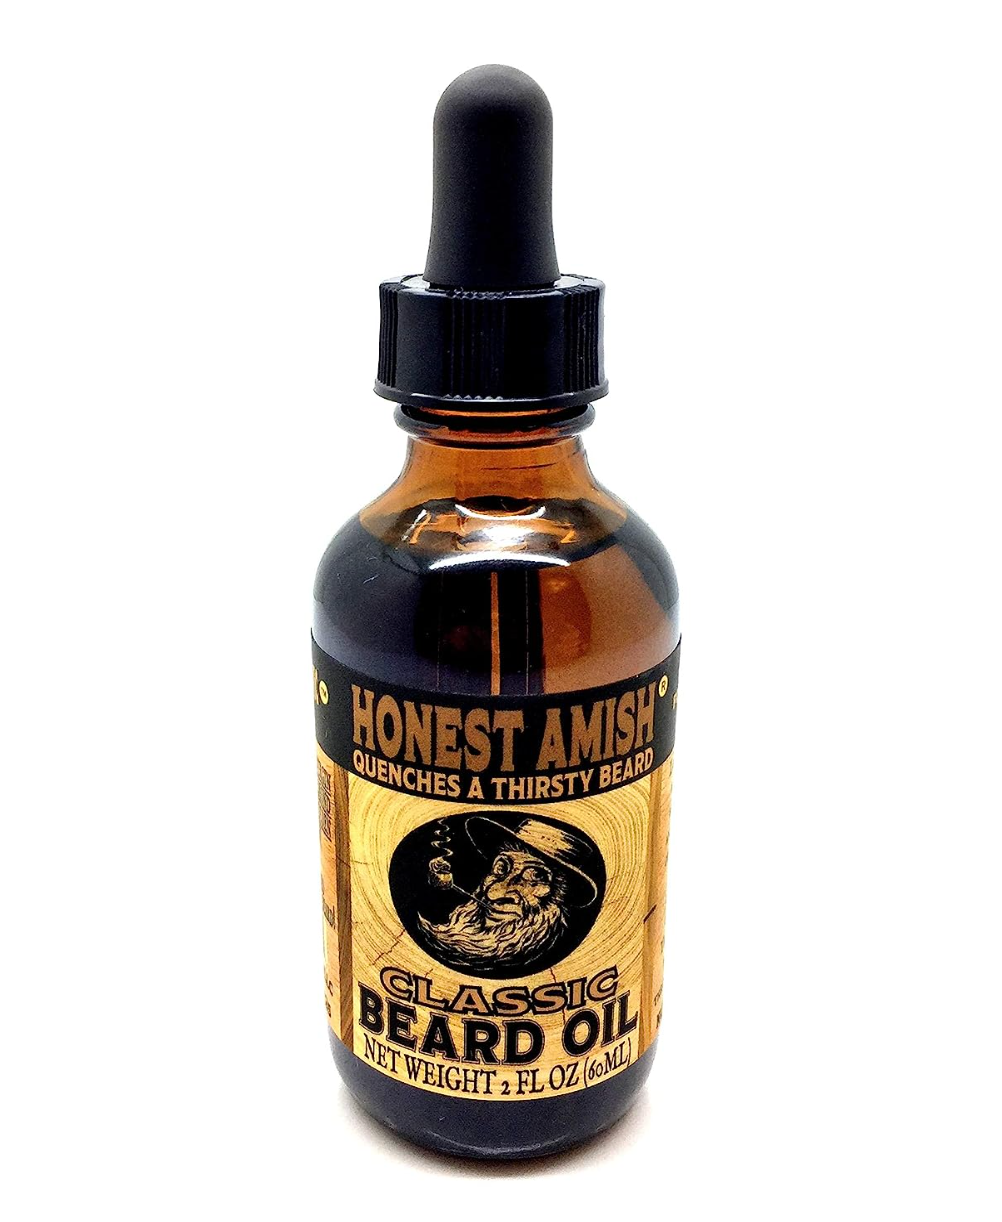 2. Honest Amish - Classic Beard Oil